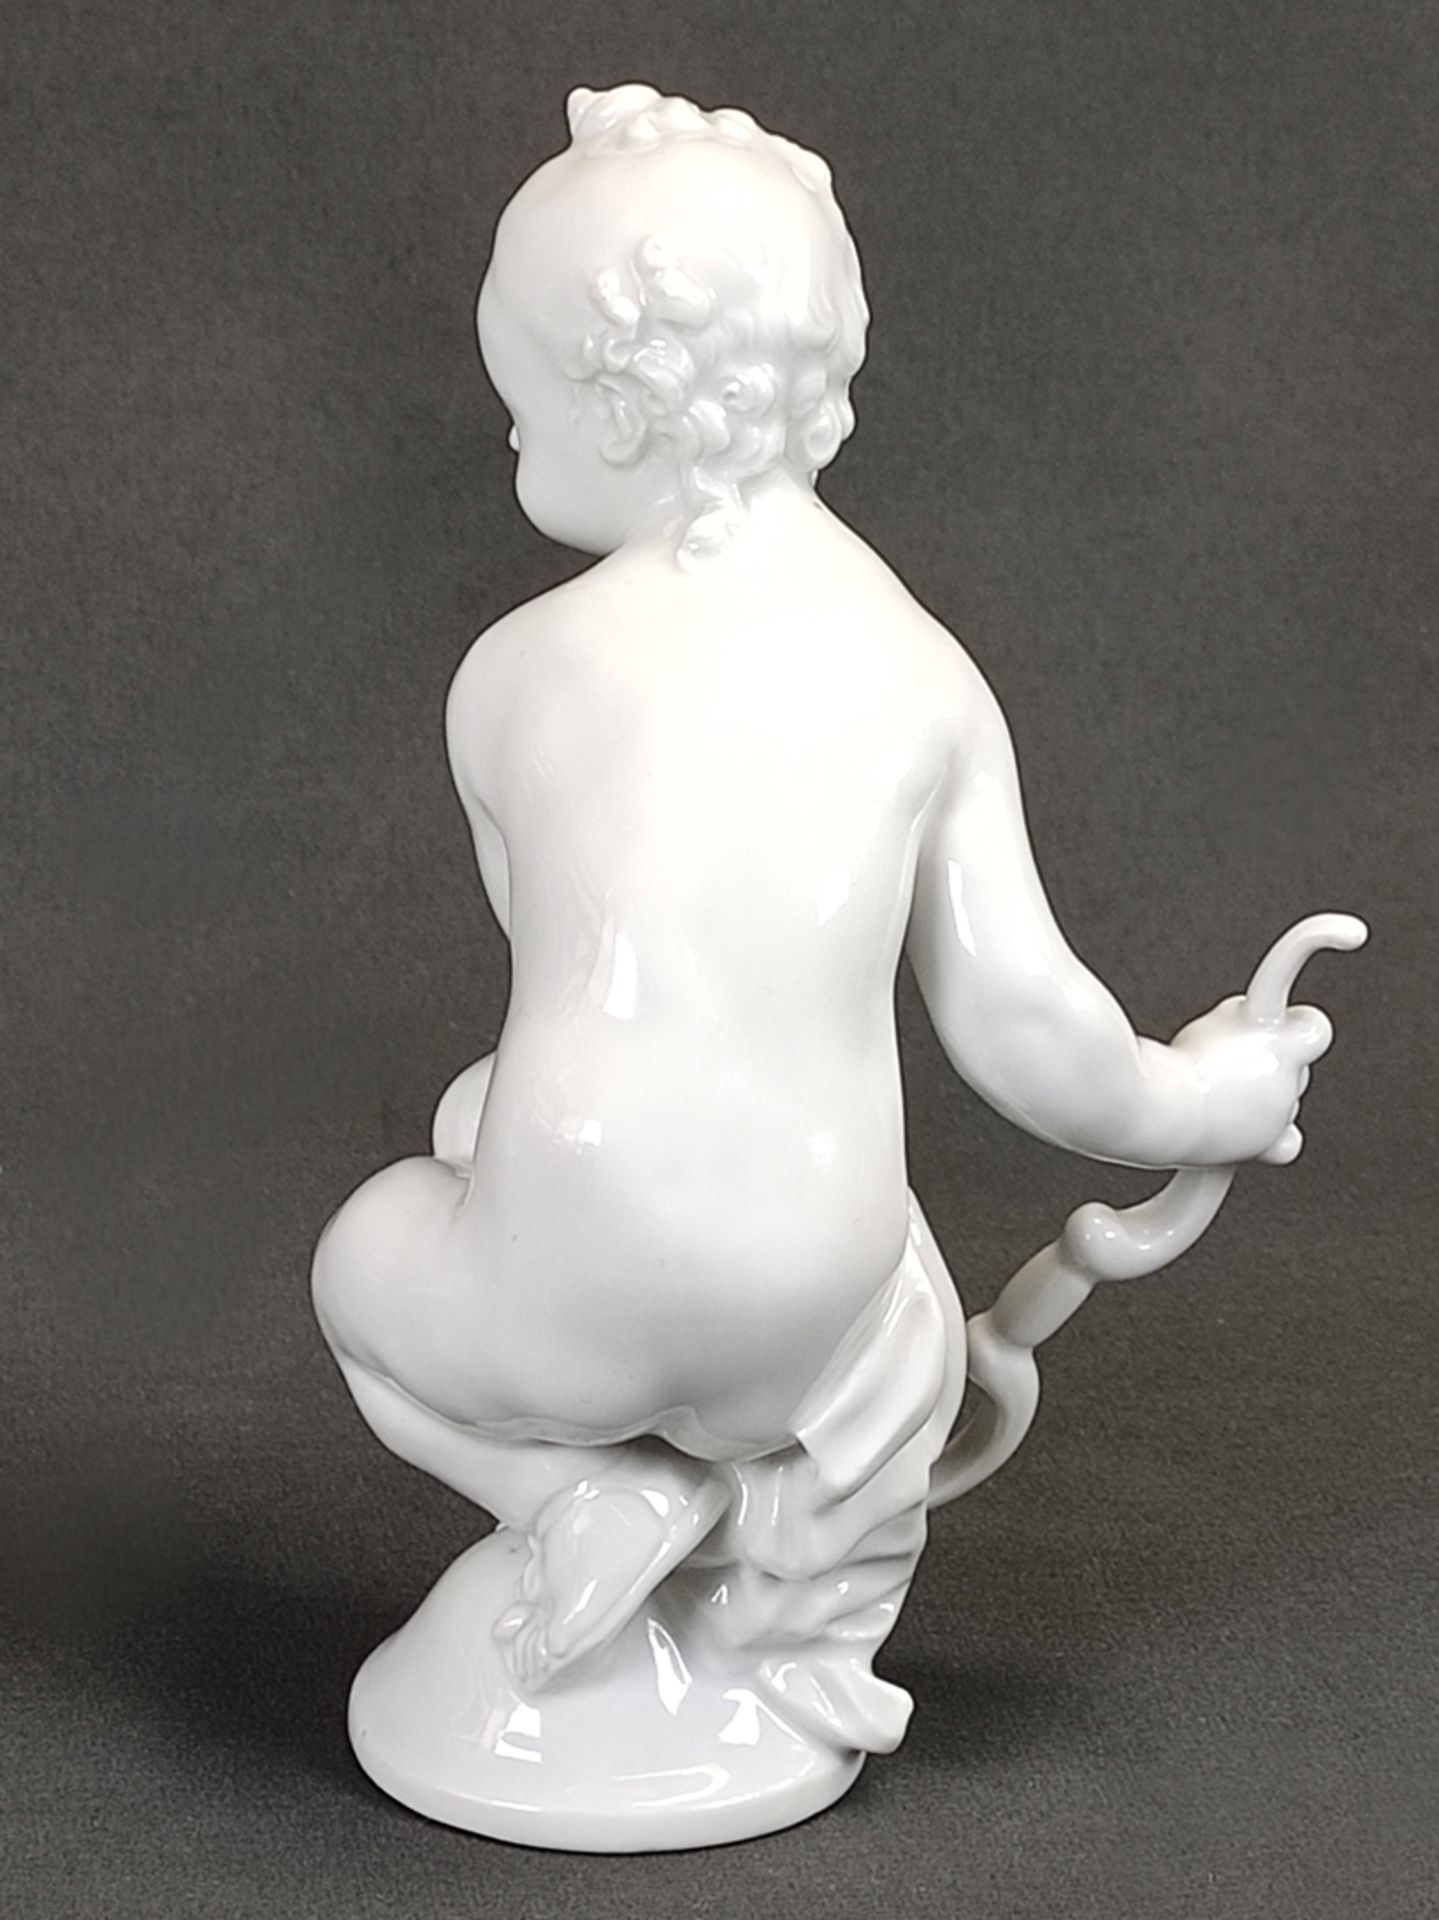 Porcelain figure "Cupid", Meissen sword mark, 1st choice, designed by Paul Scheurich (1883 - 1945) - Image 2 of 3